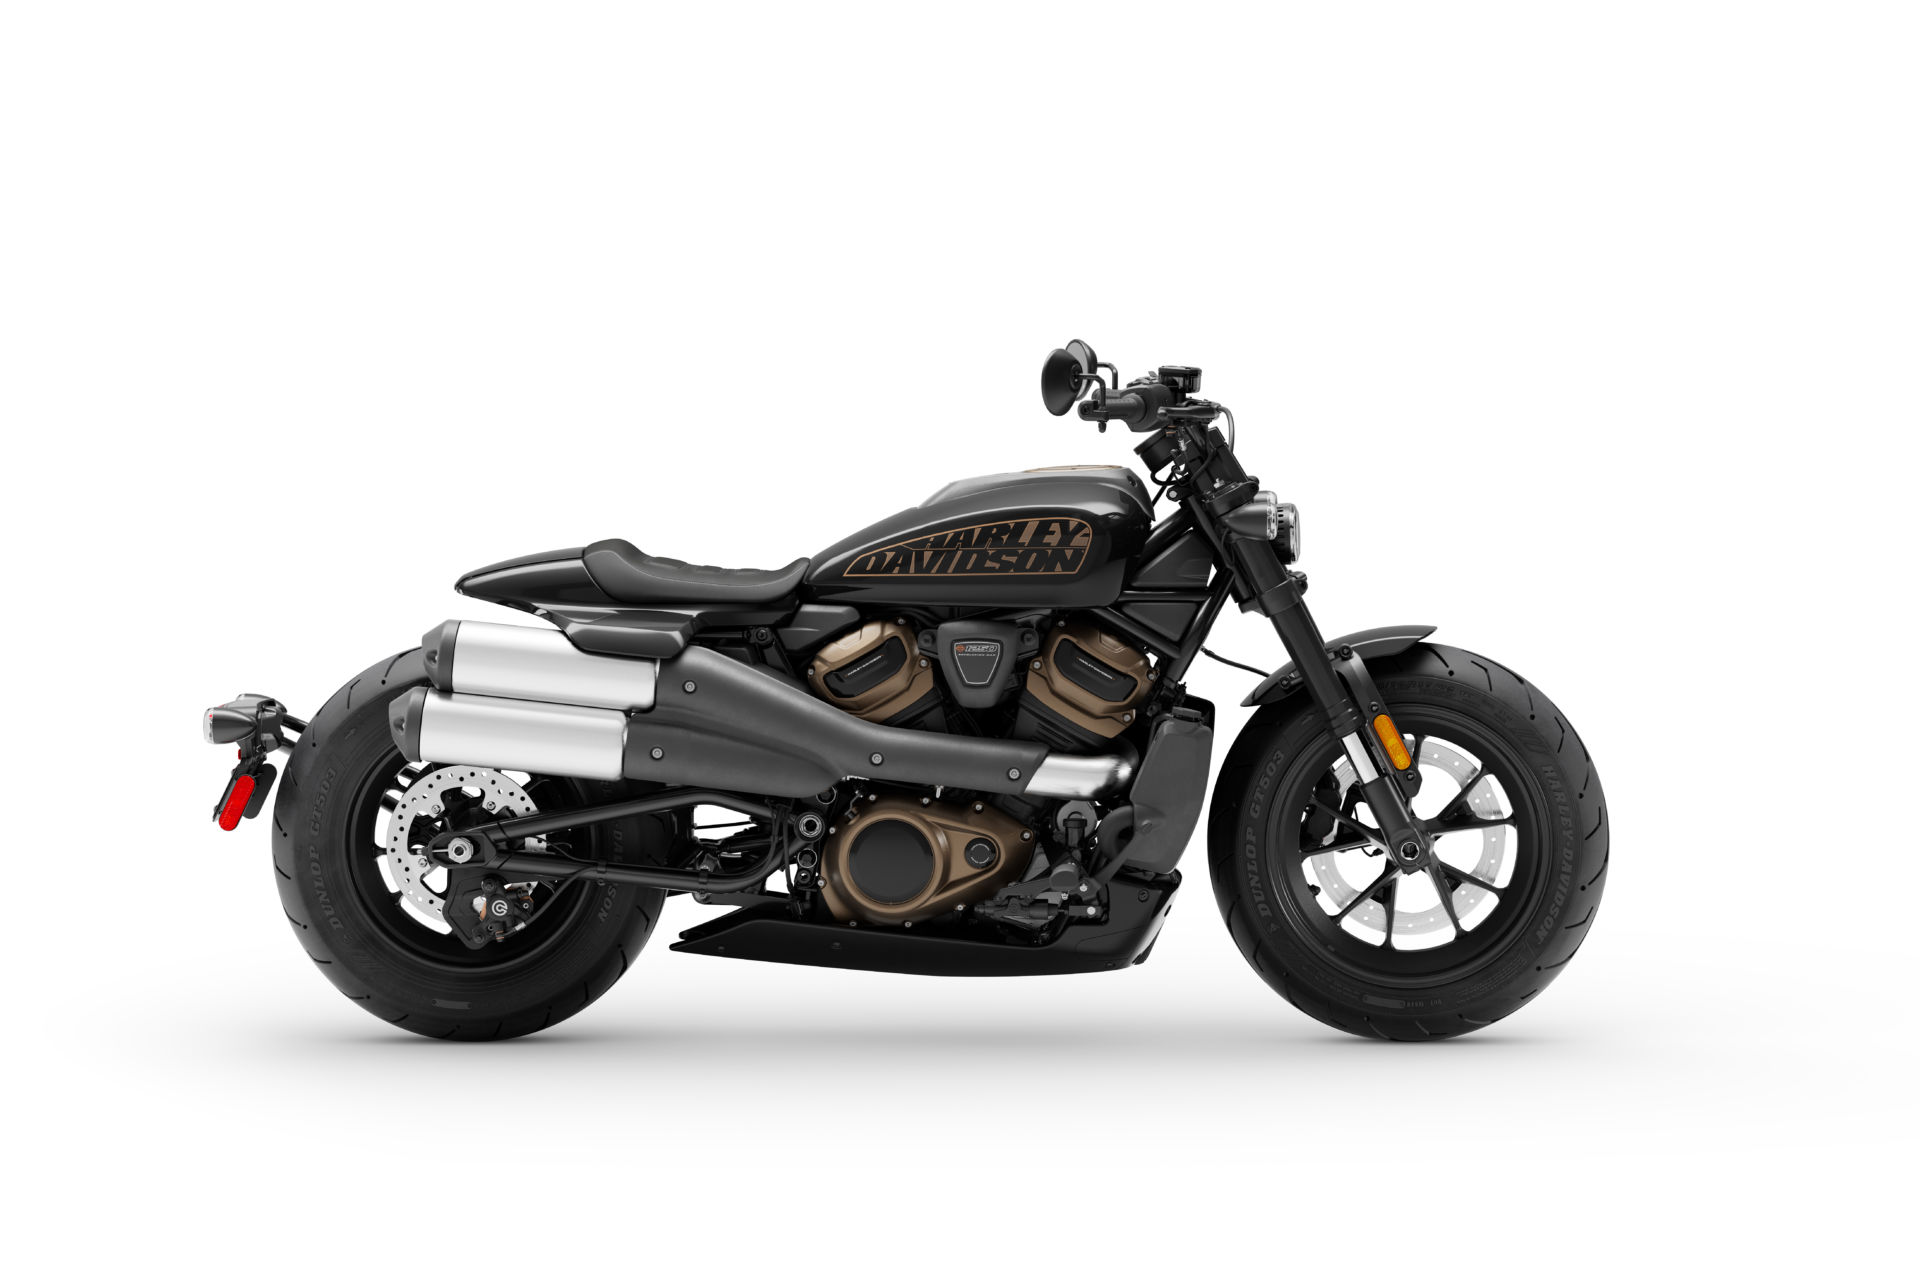 New Harley Davidson Sportster S With Revolution Max 1250v Twin Engine Road Racing World Magazine Autobala